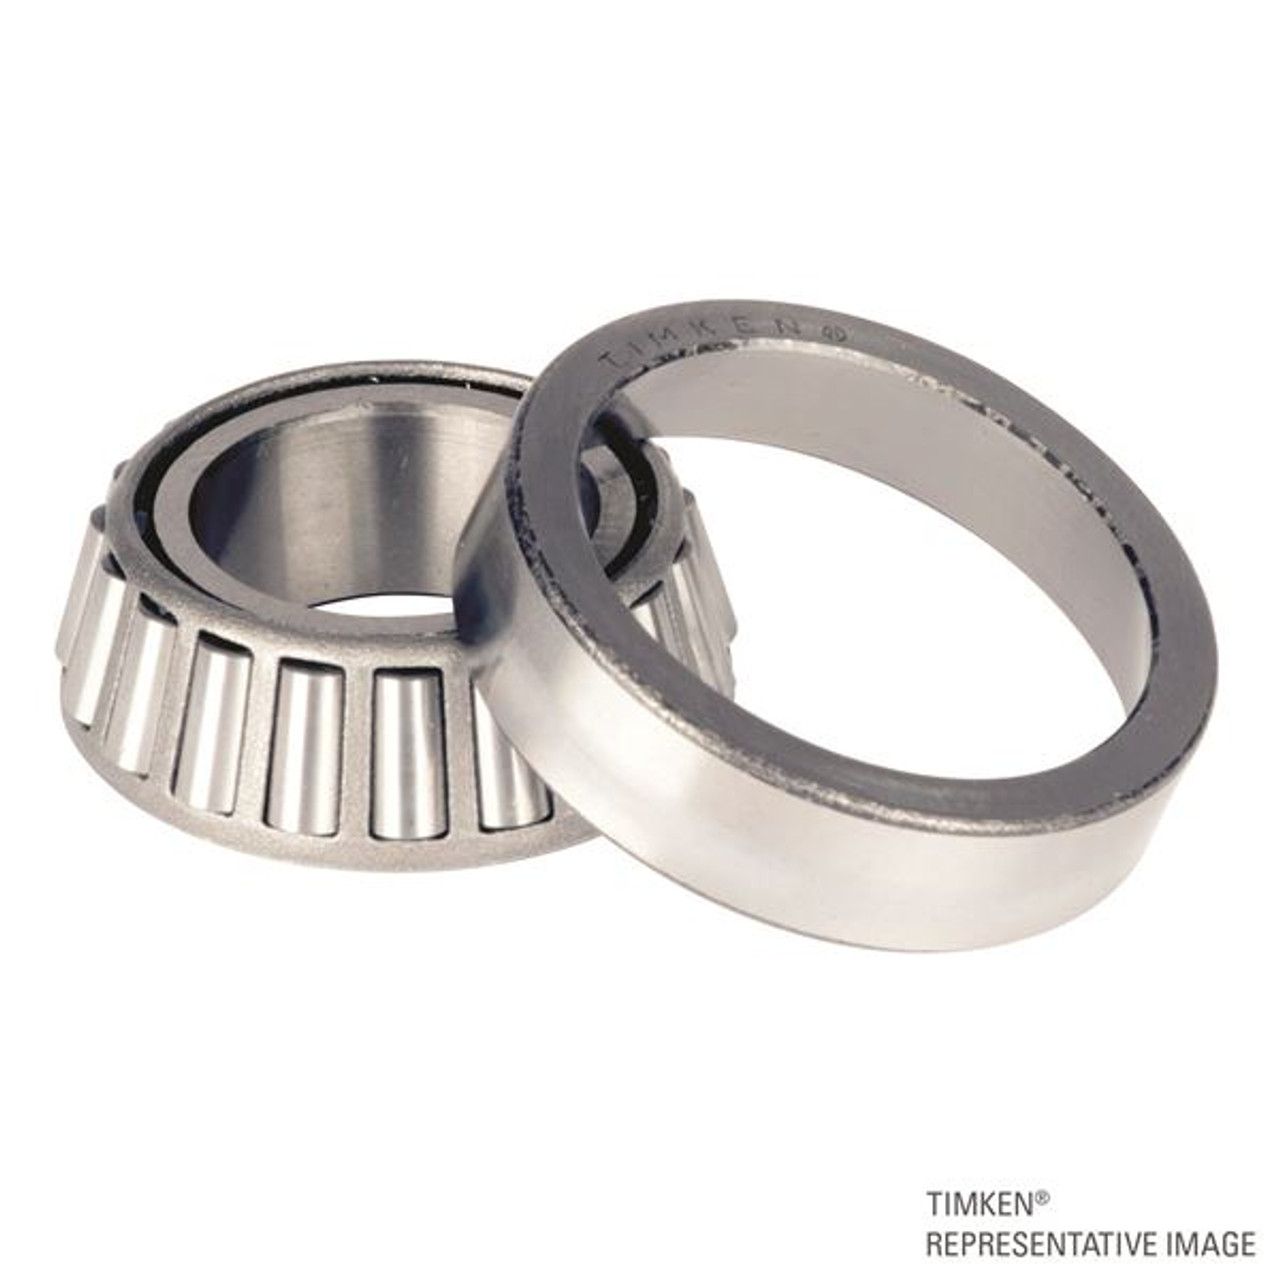 Timken® Metric Cup & Cone Assembly - Power Dense  NP416359-90KA1